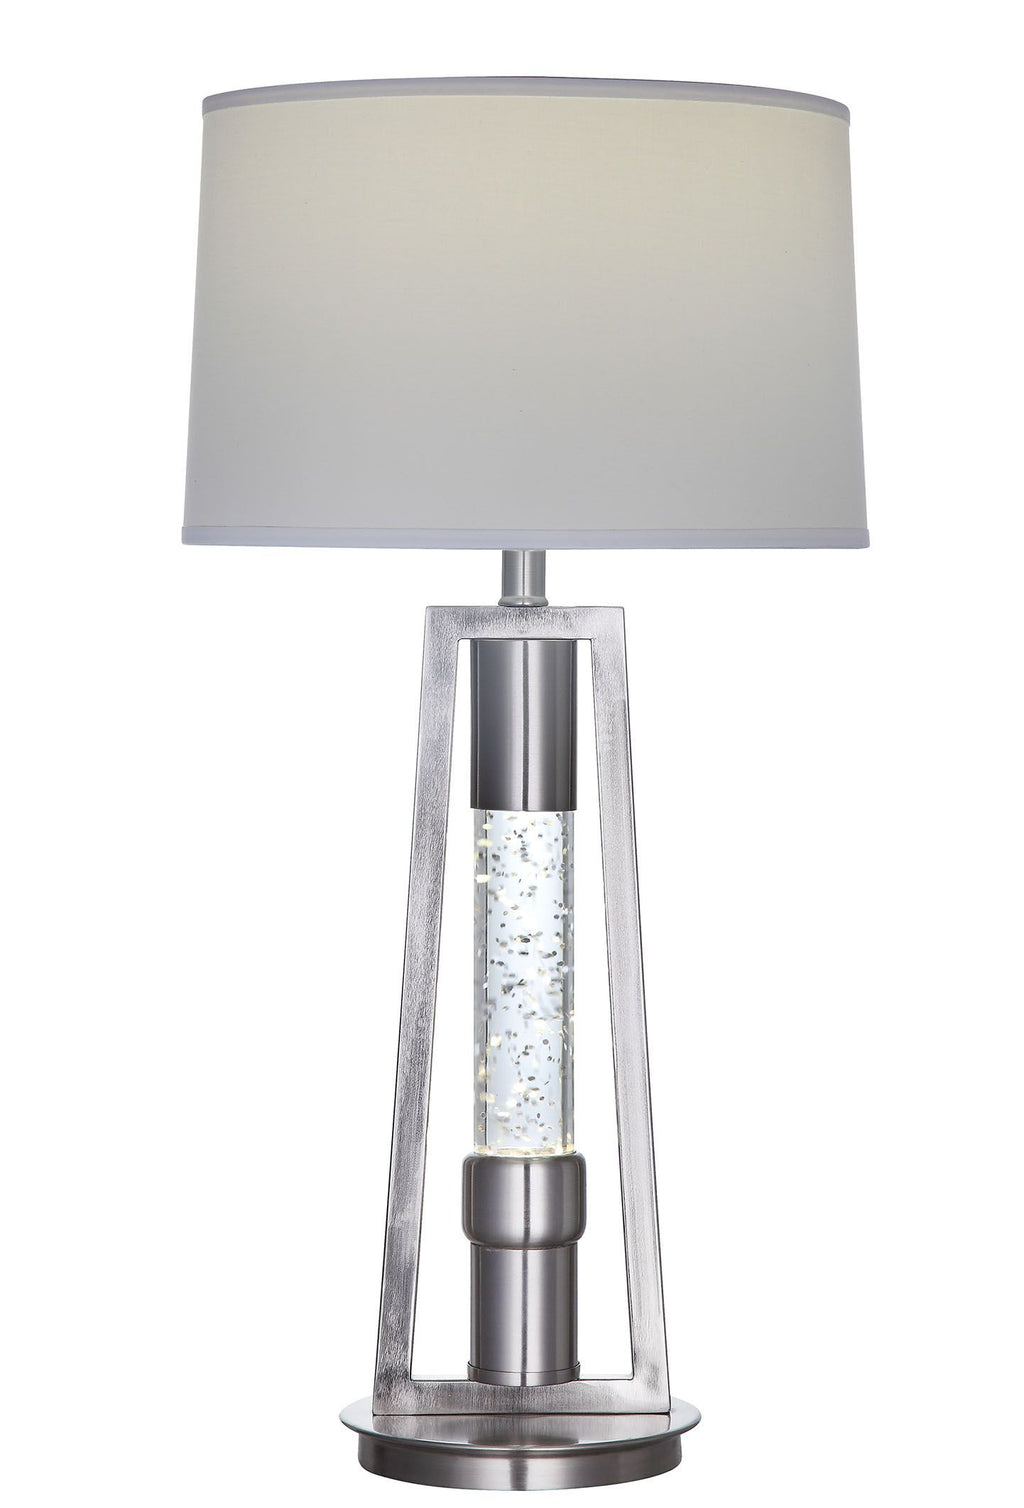 Ovesen - Table Lamp - Brushed Nickel